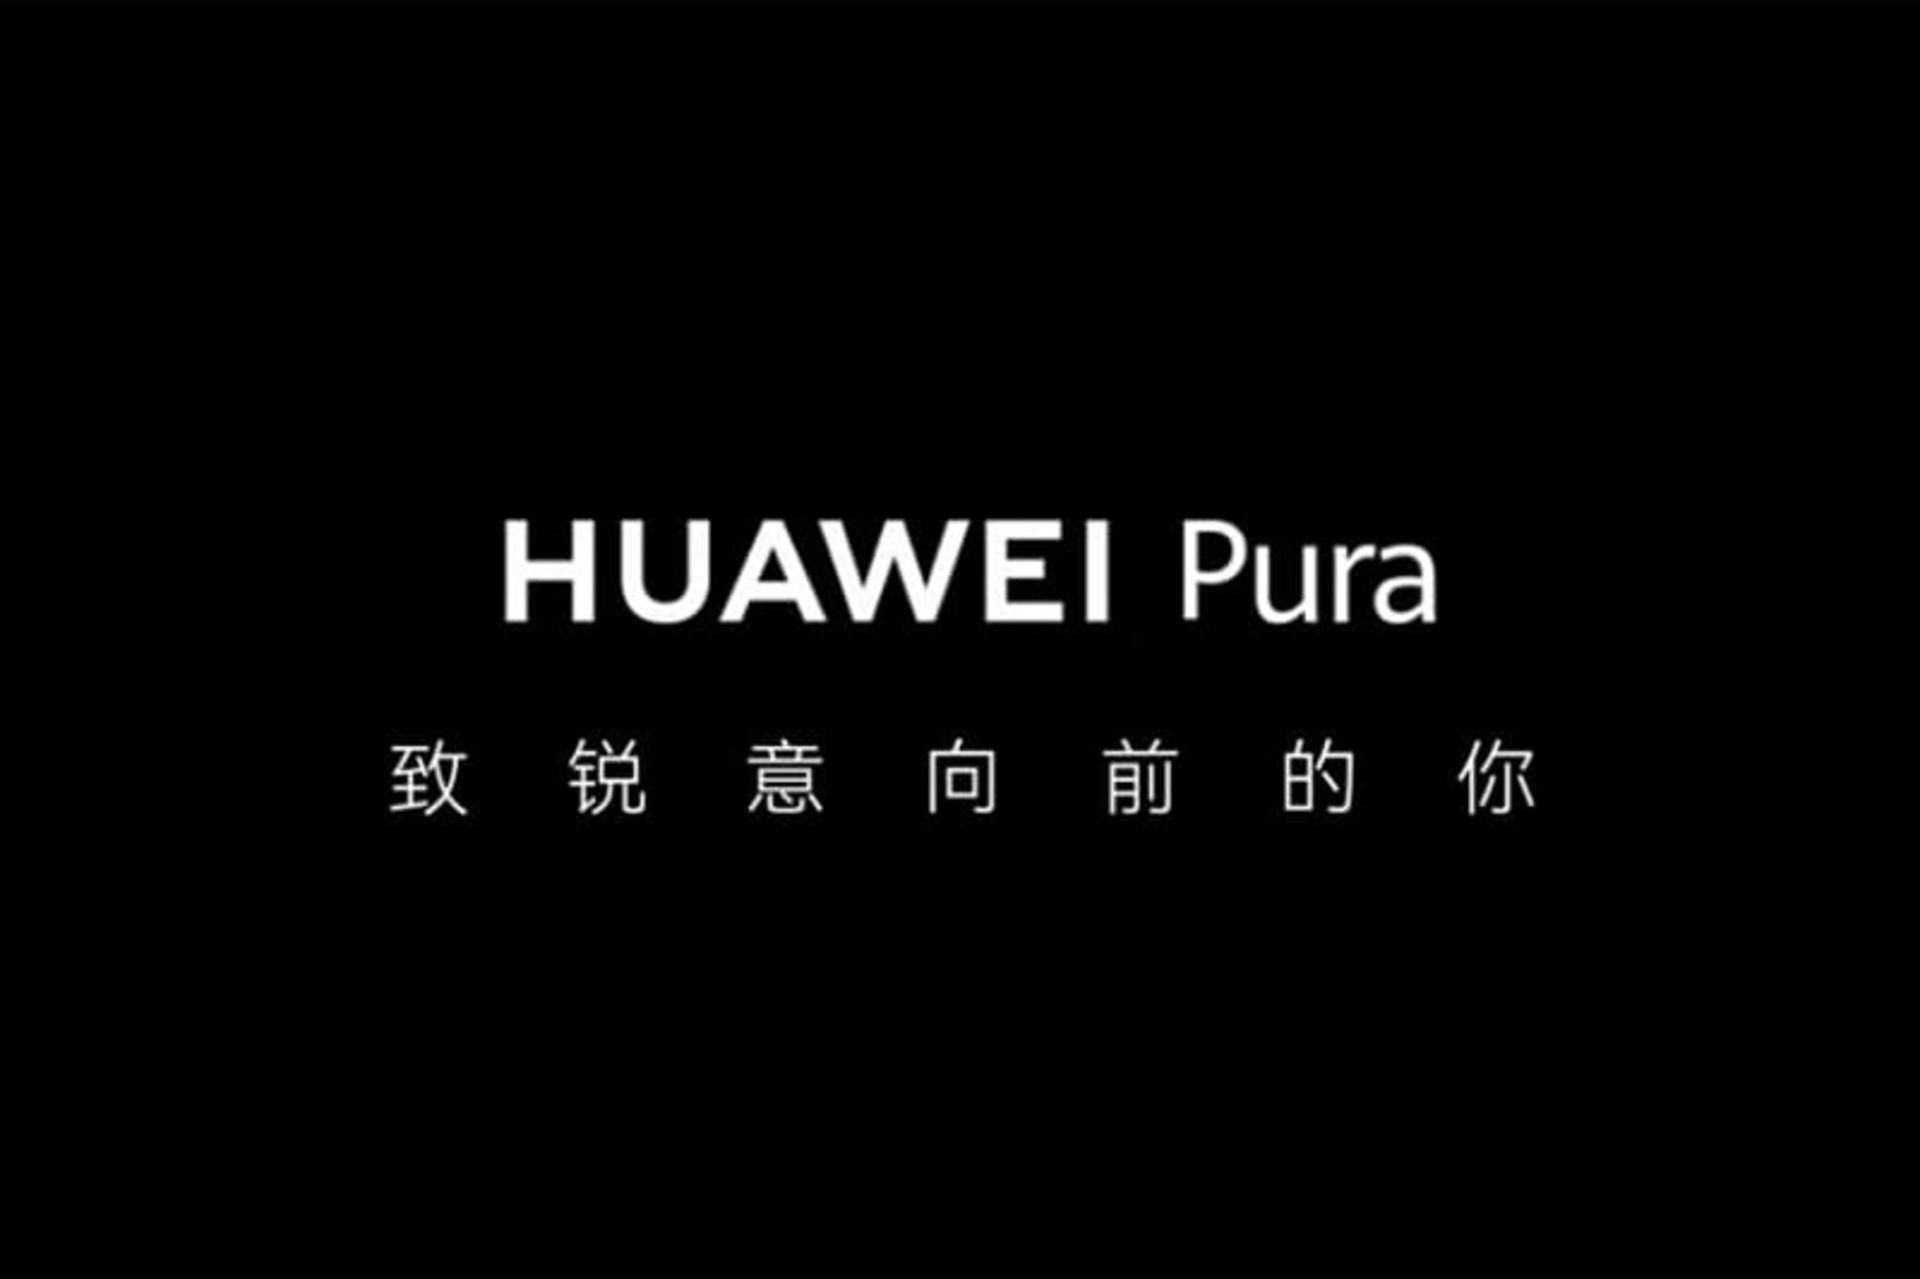 لوگو هواوی پورا / Huawei Pura در پس‌زمینه مشکی